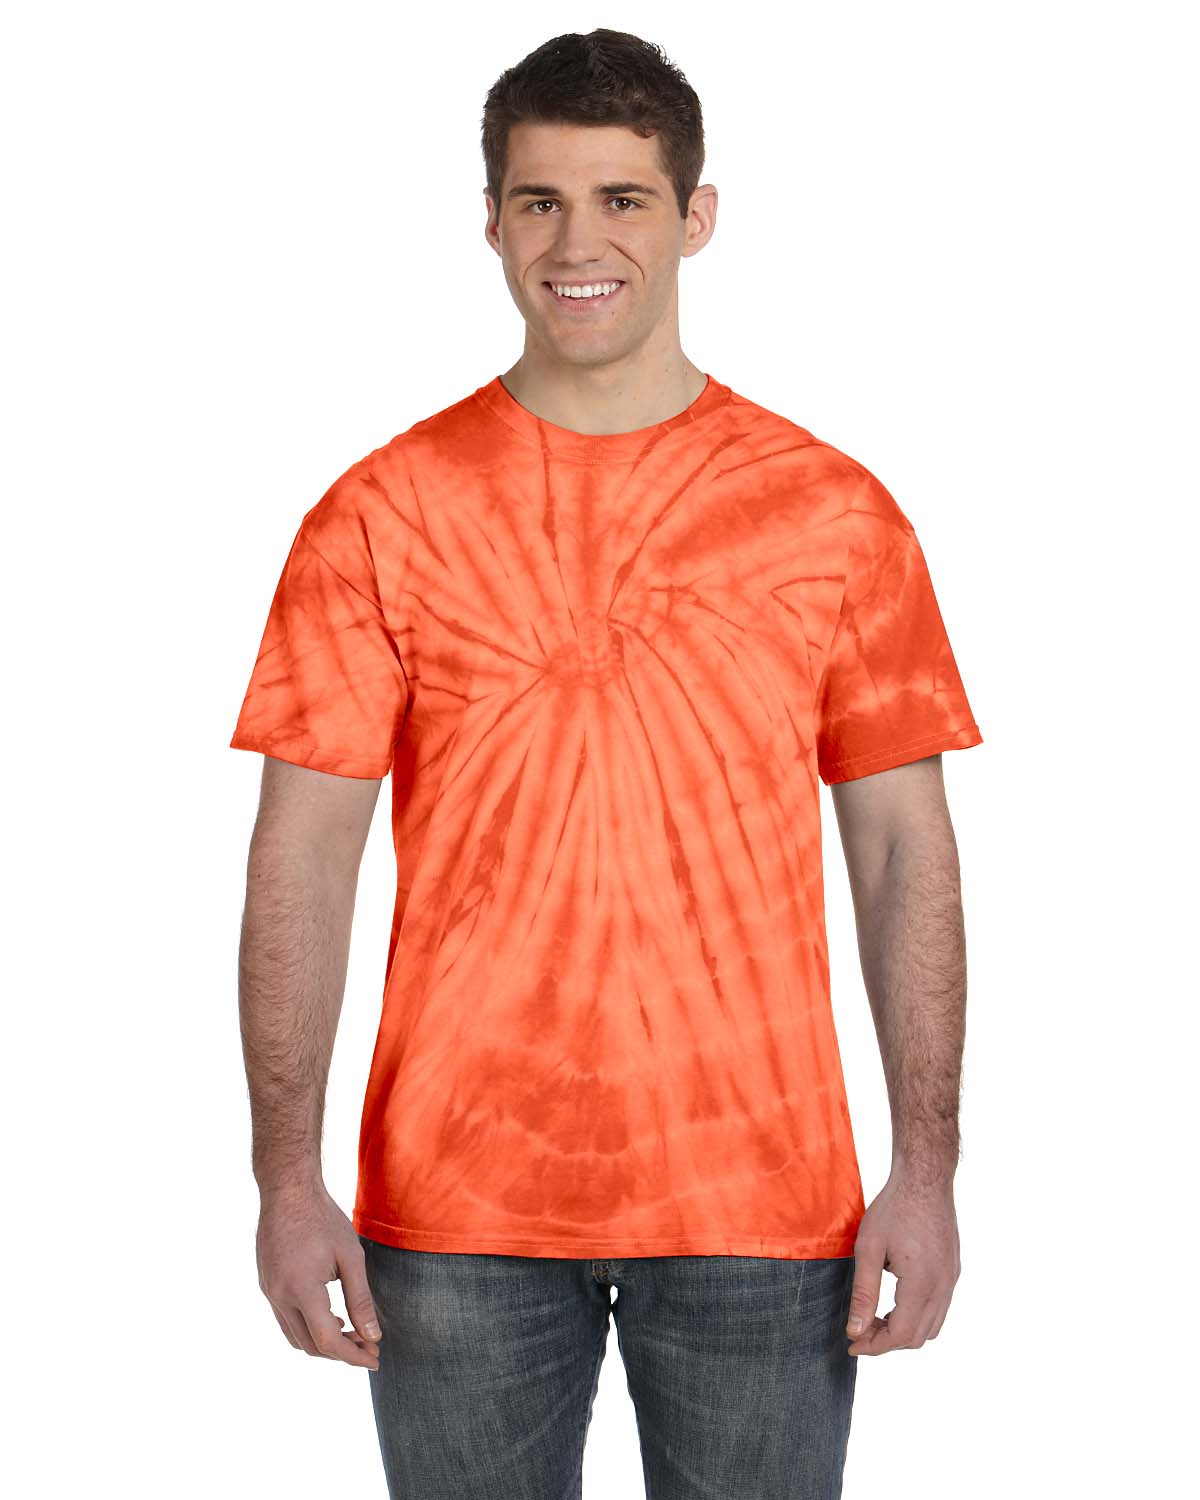 Tie Dye Charlotte Hornets T-Shirt [M] – Spicy Dye